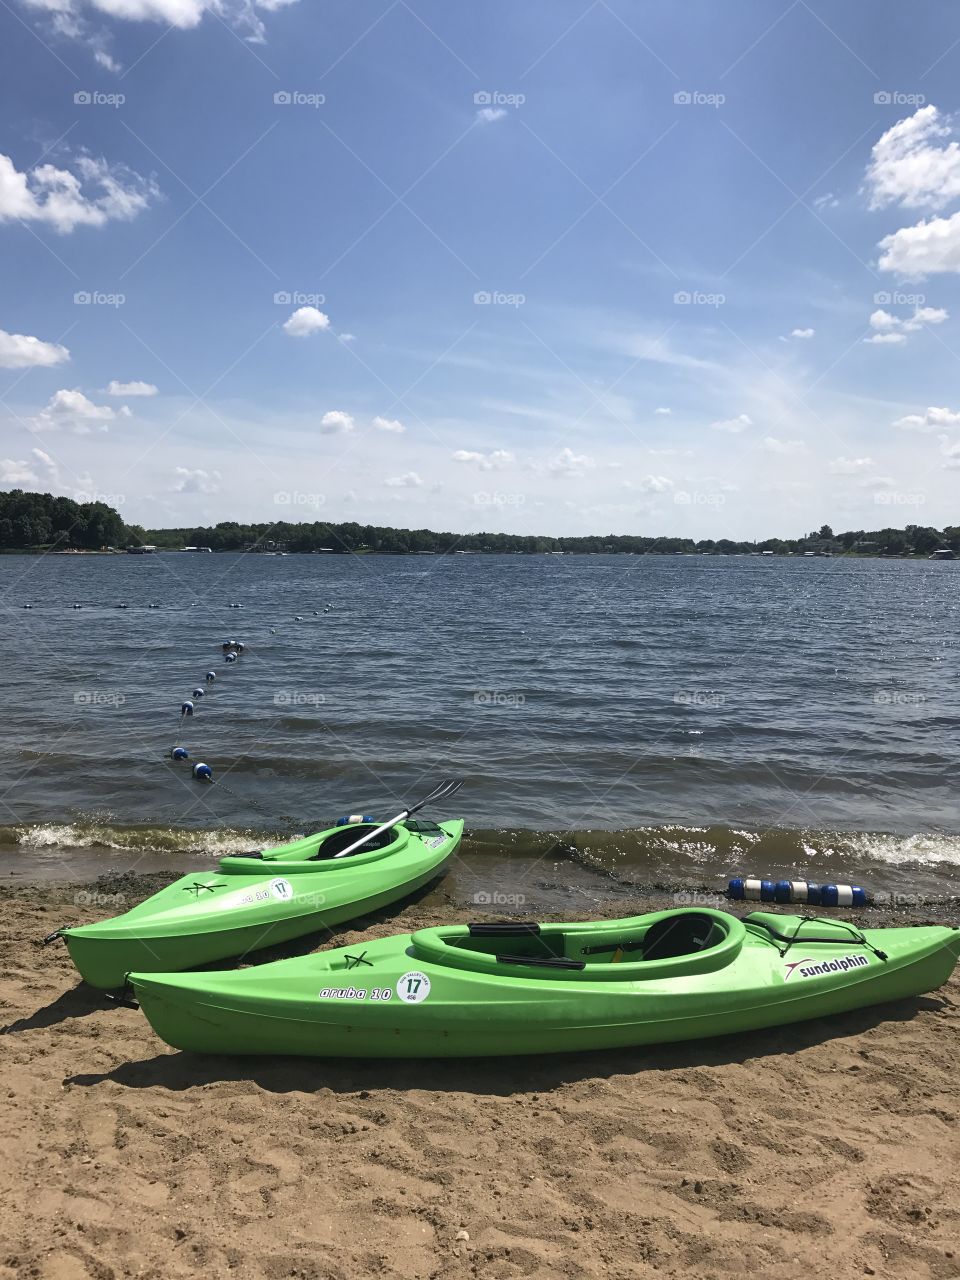 Kayaks waiting to go back across the lake